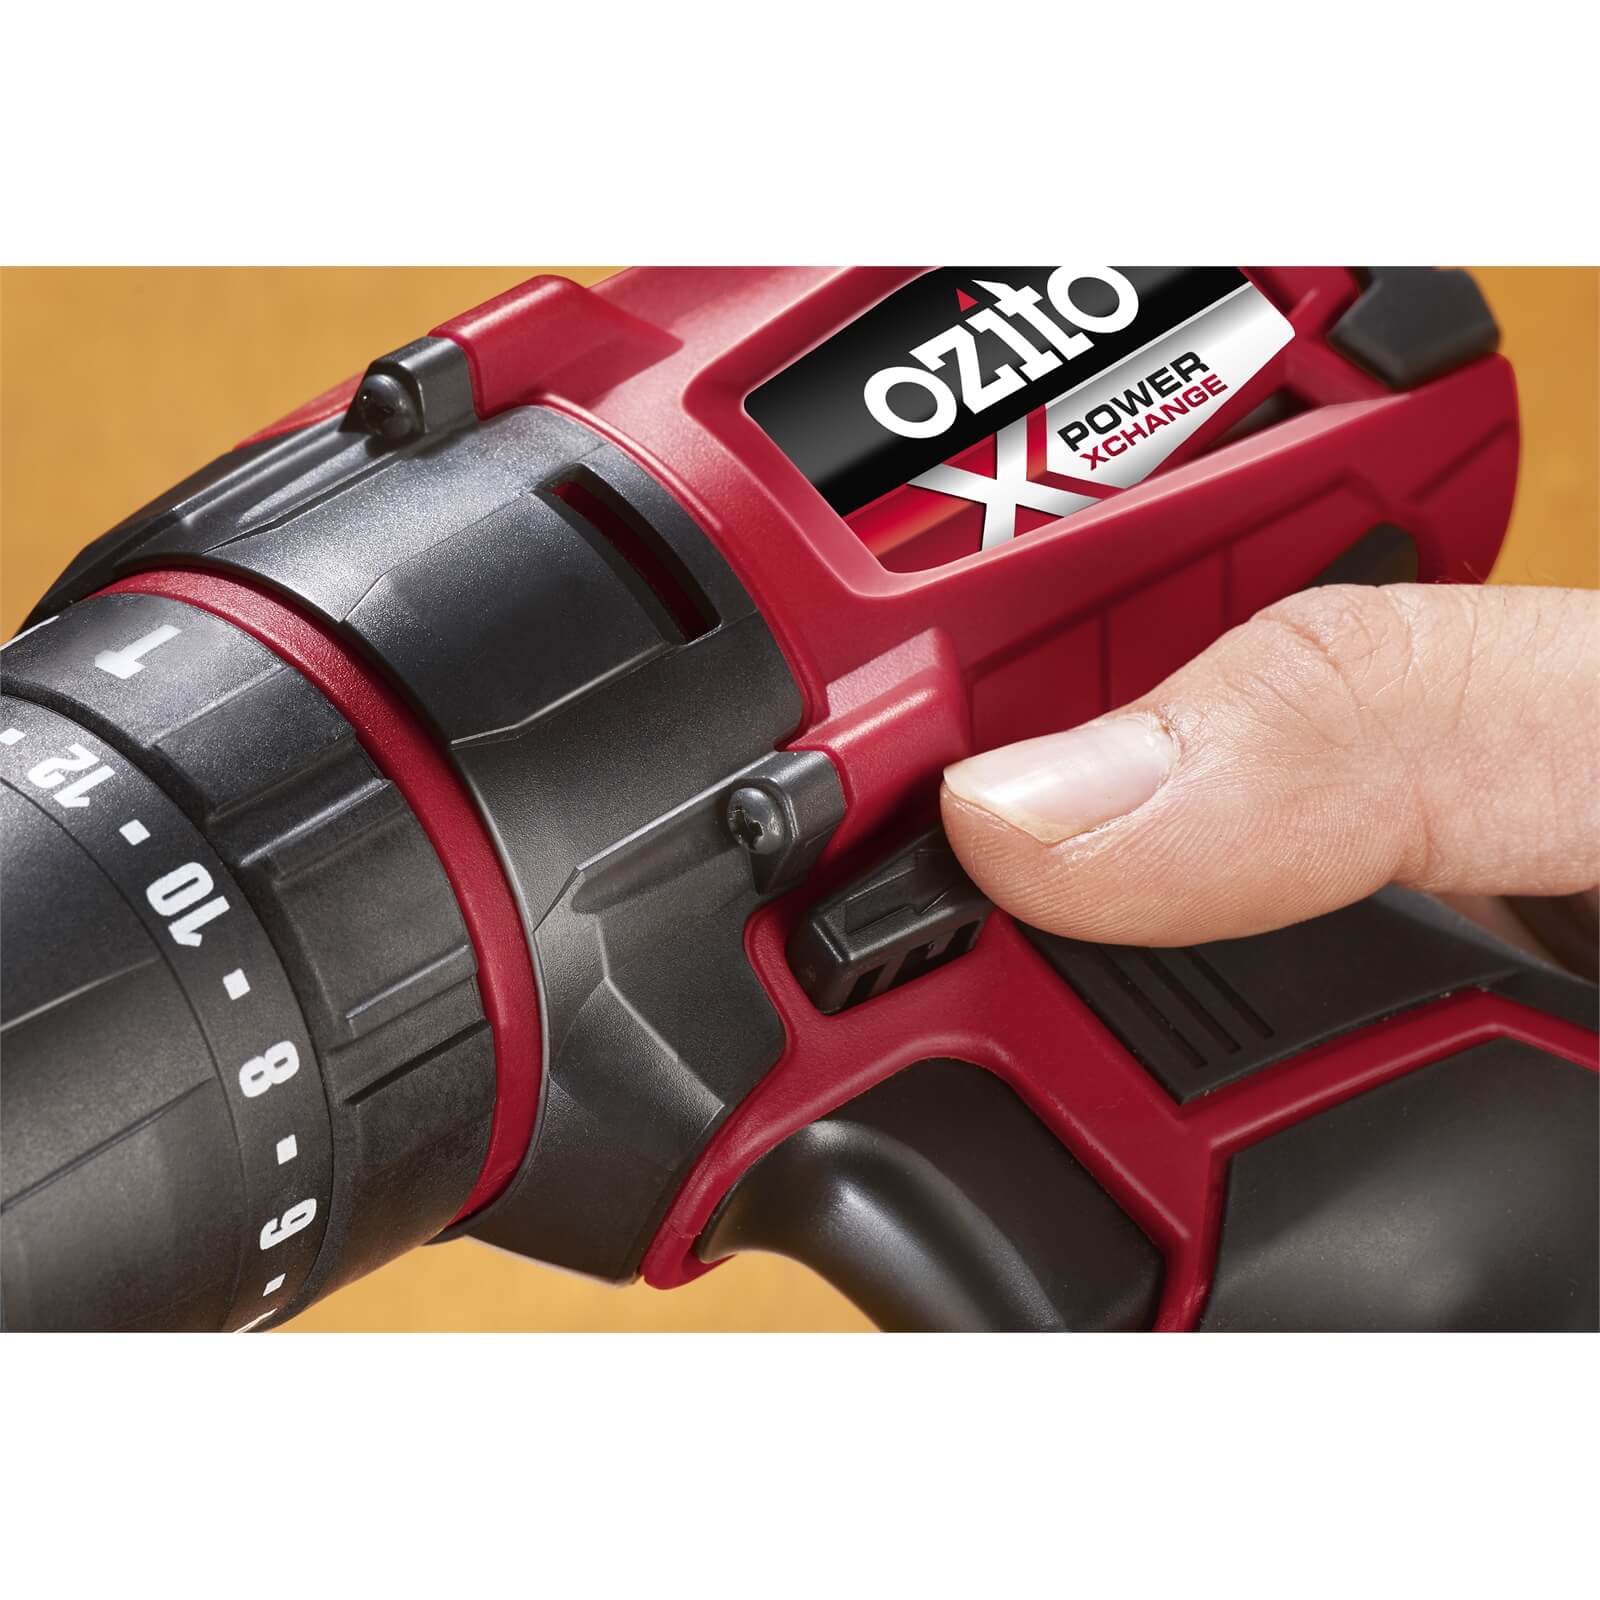 Ozito by Einhell Power X Change 18V Cordless Hammer Drill Kit